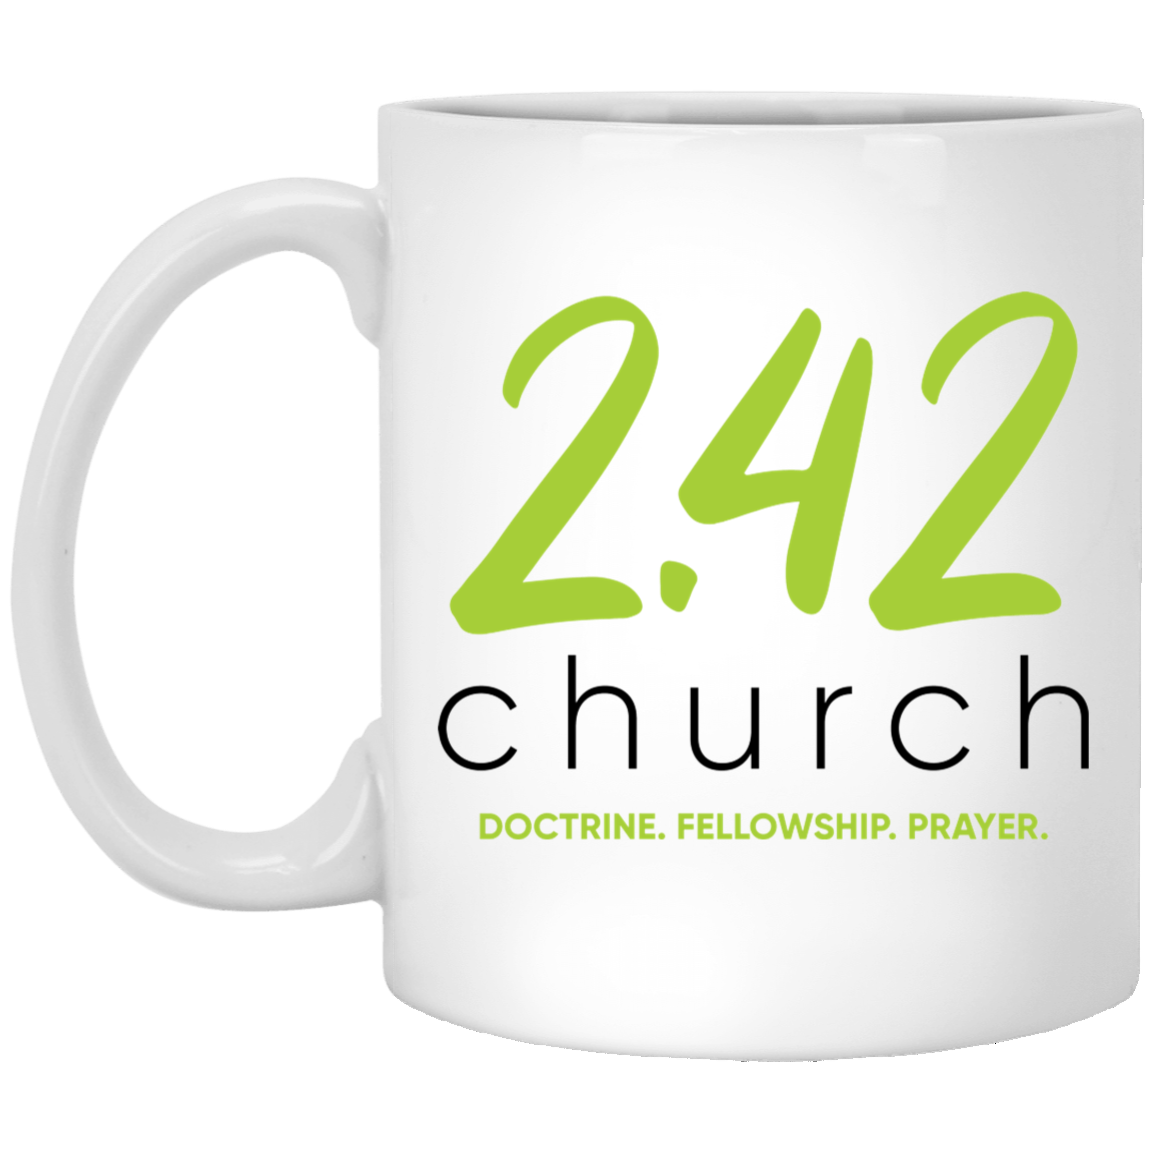 2.42 Church Mugs